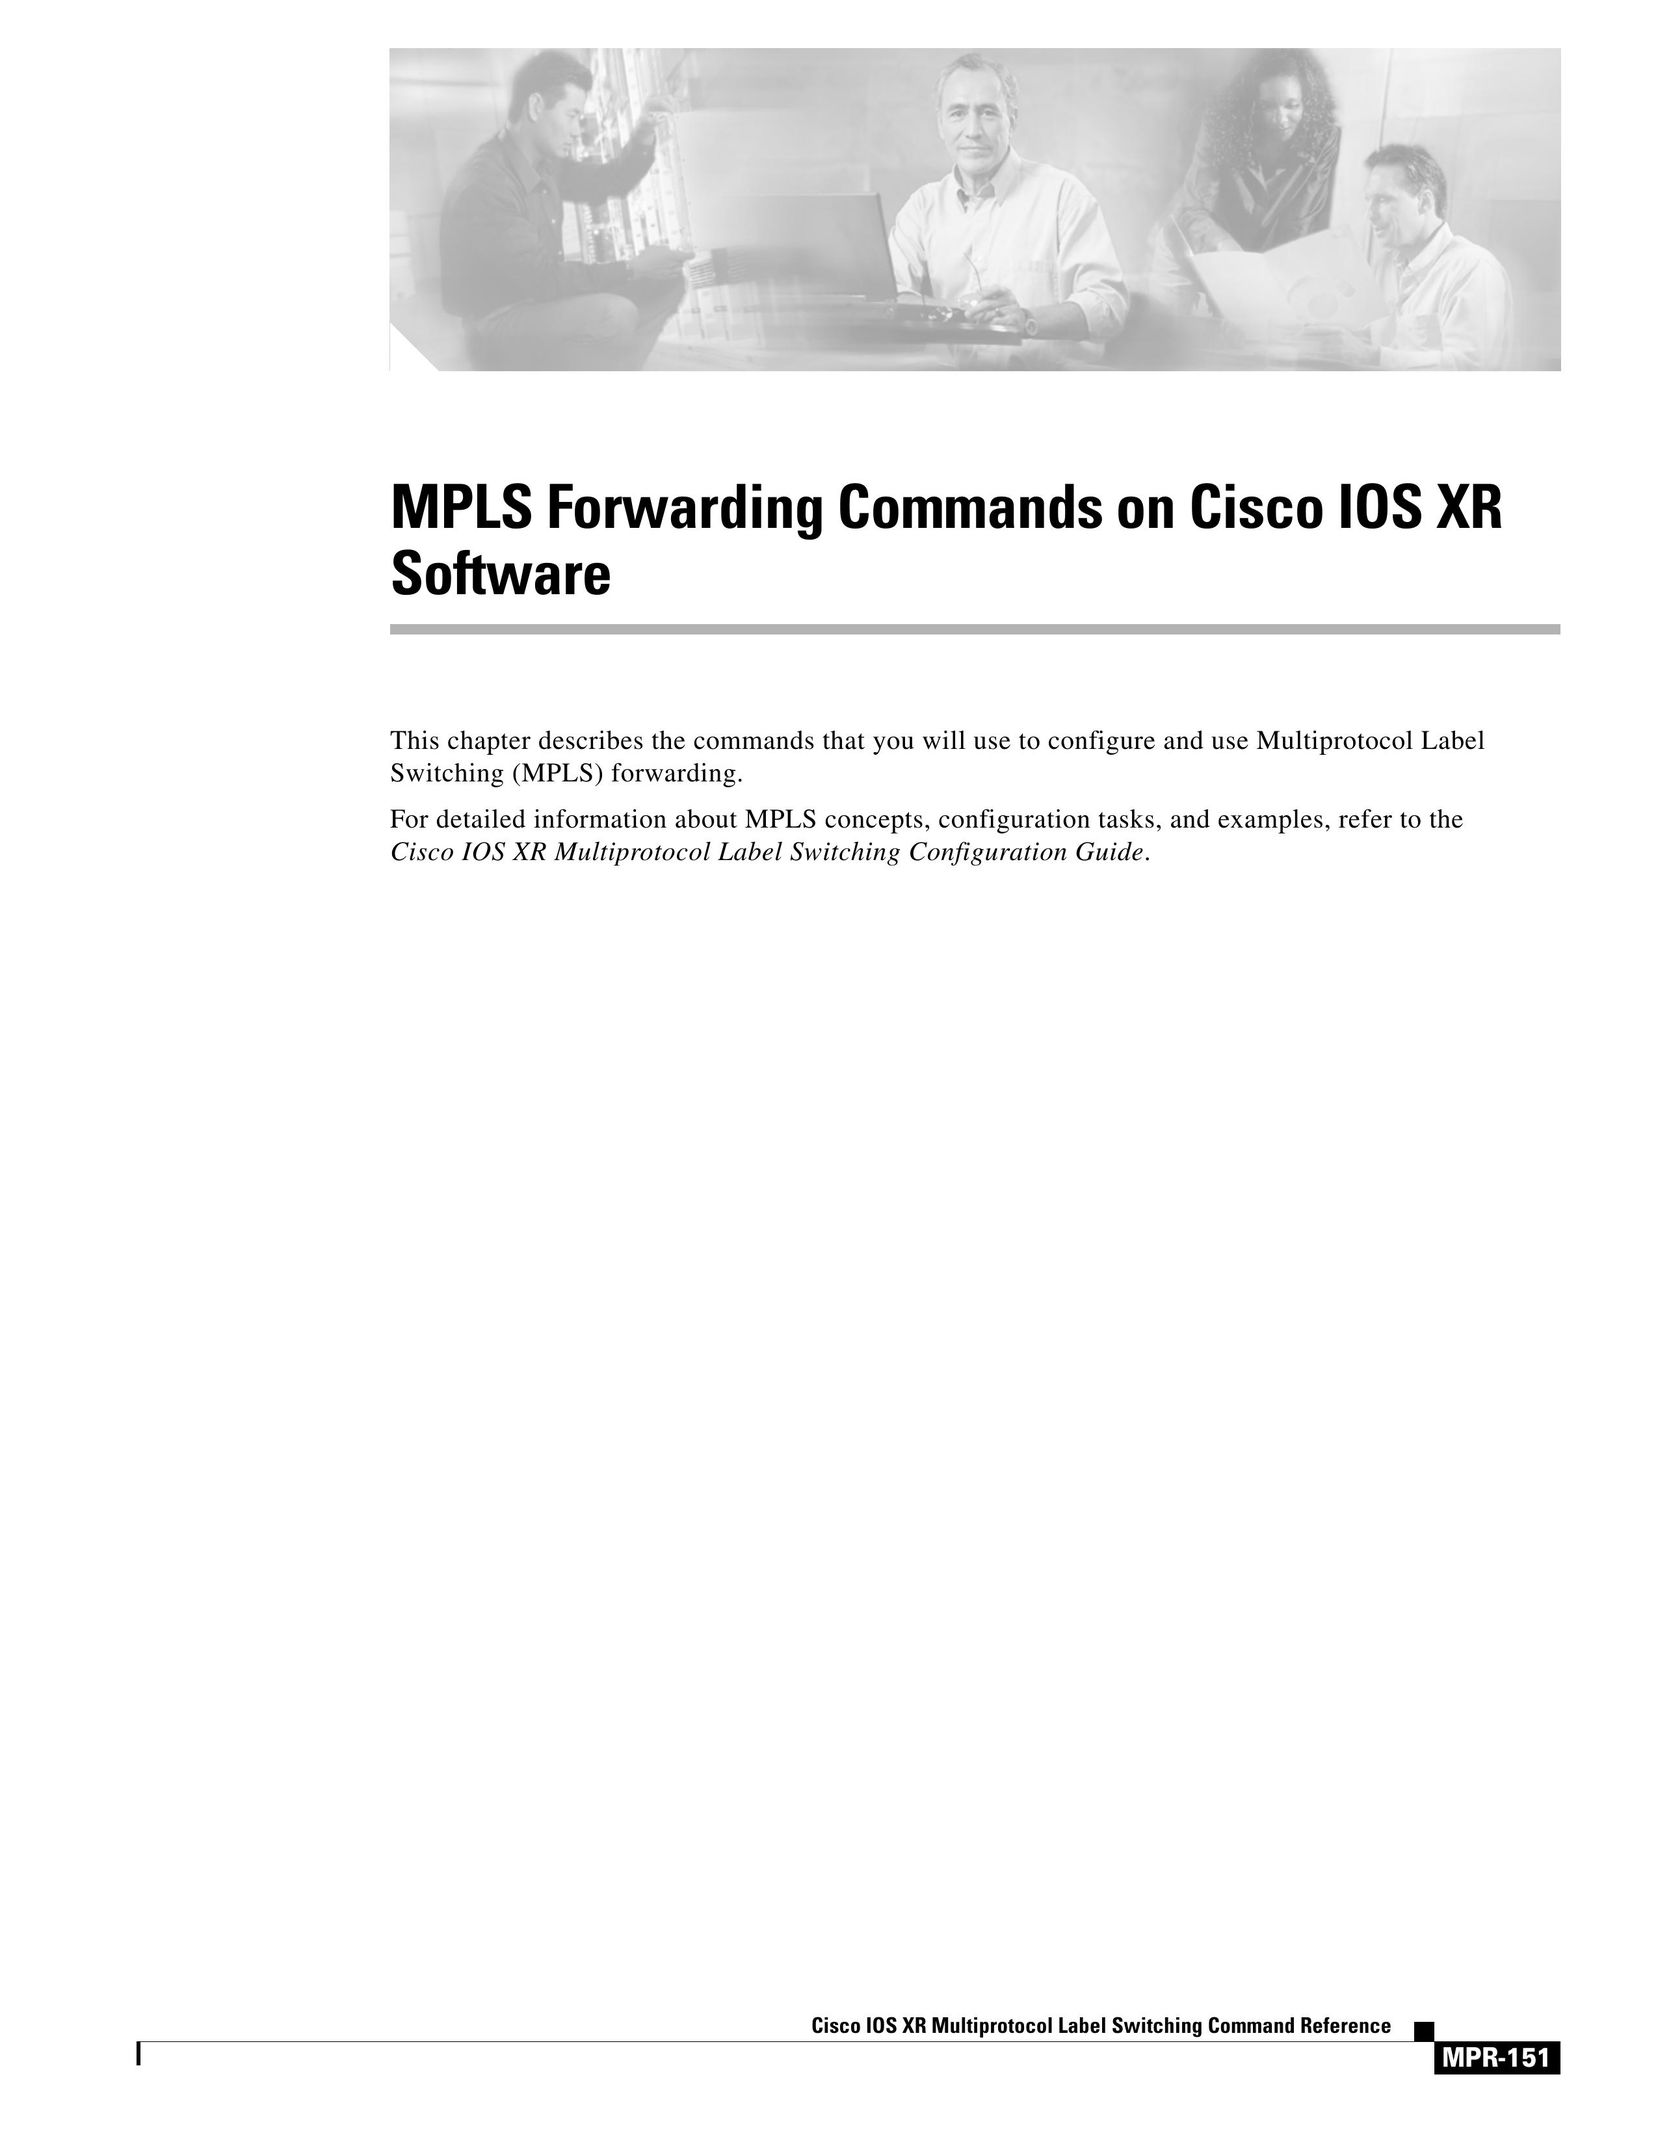 Cisco Systems MPR-151 Welder User Manual